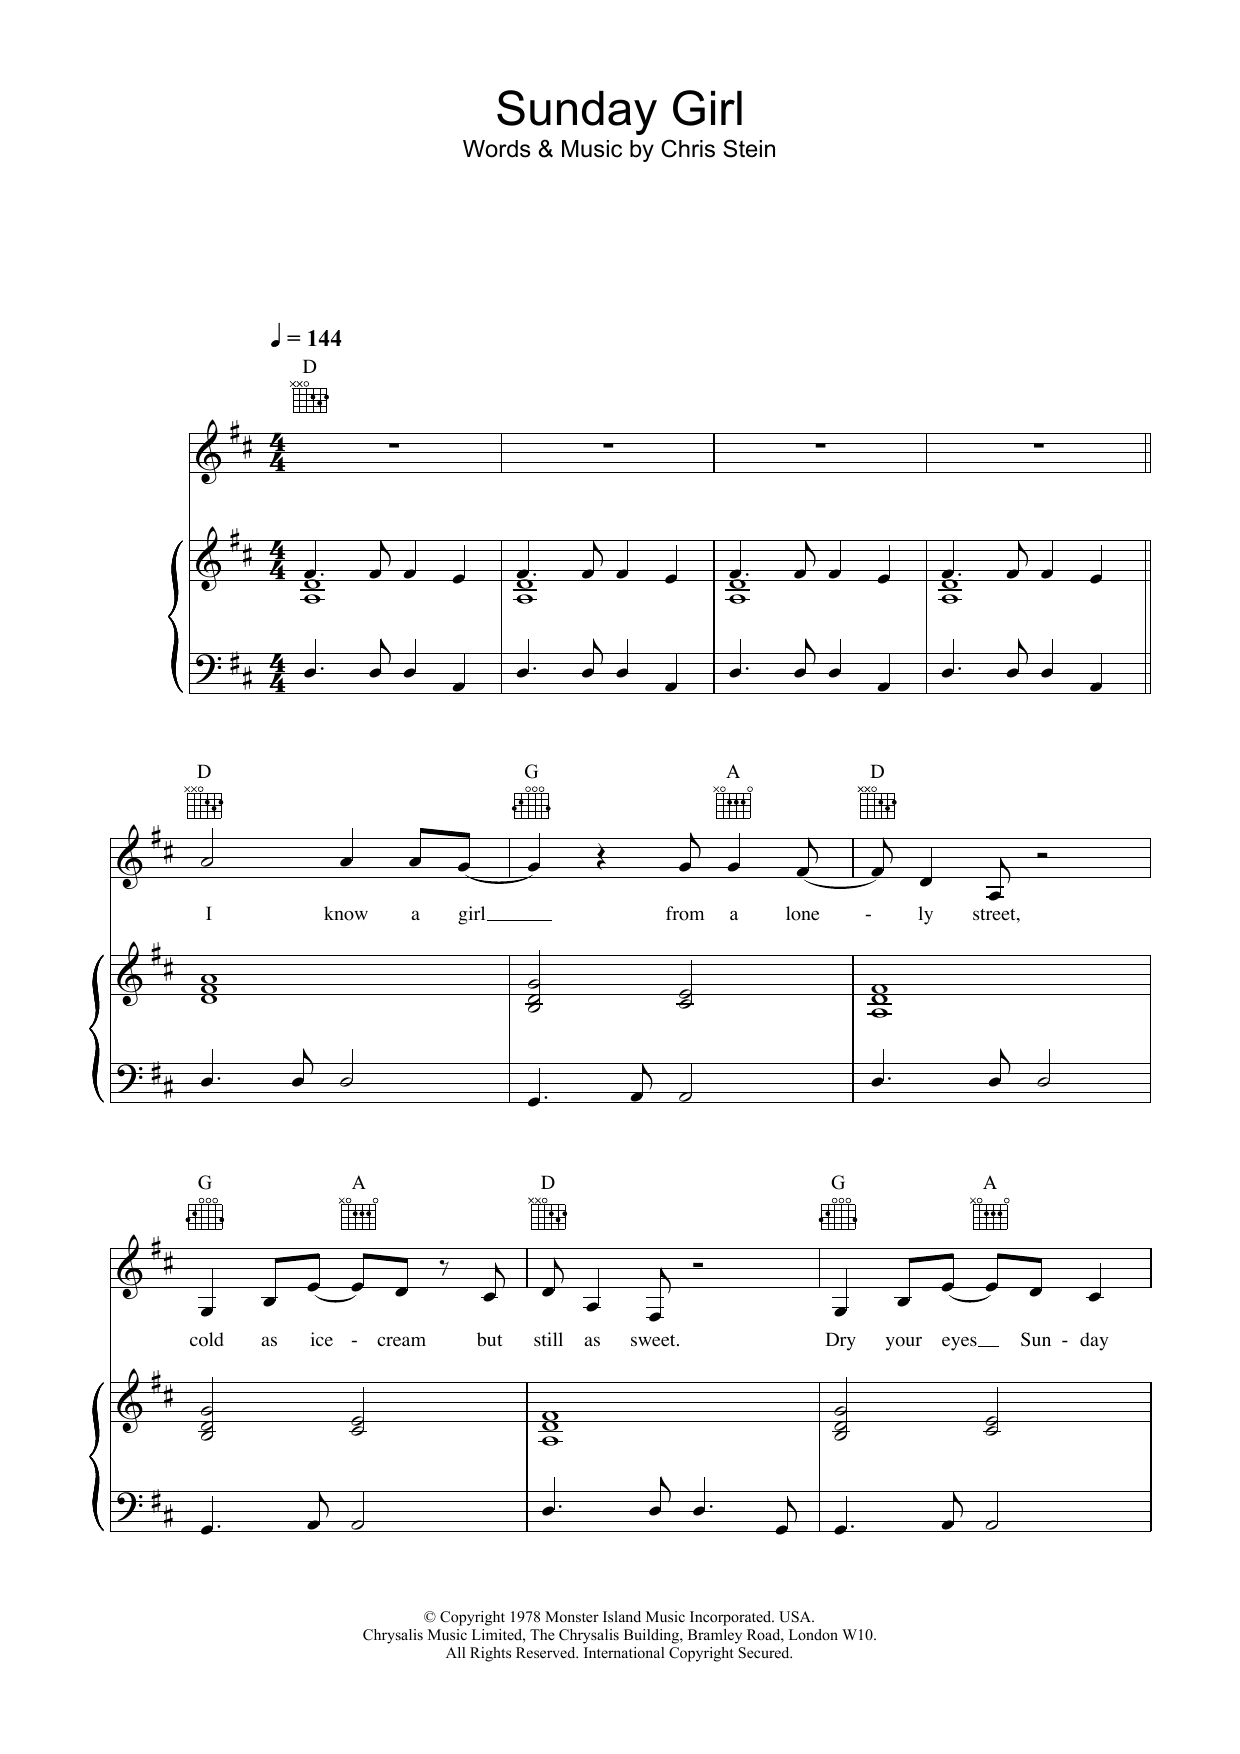 Blondie Sunday Girl Sheet Music Notes & Chords for Keyboard - Download or Print PDF